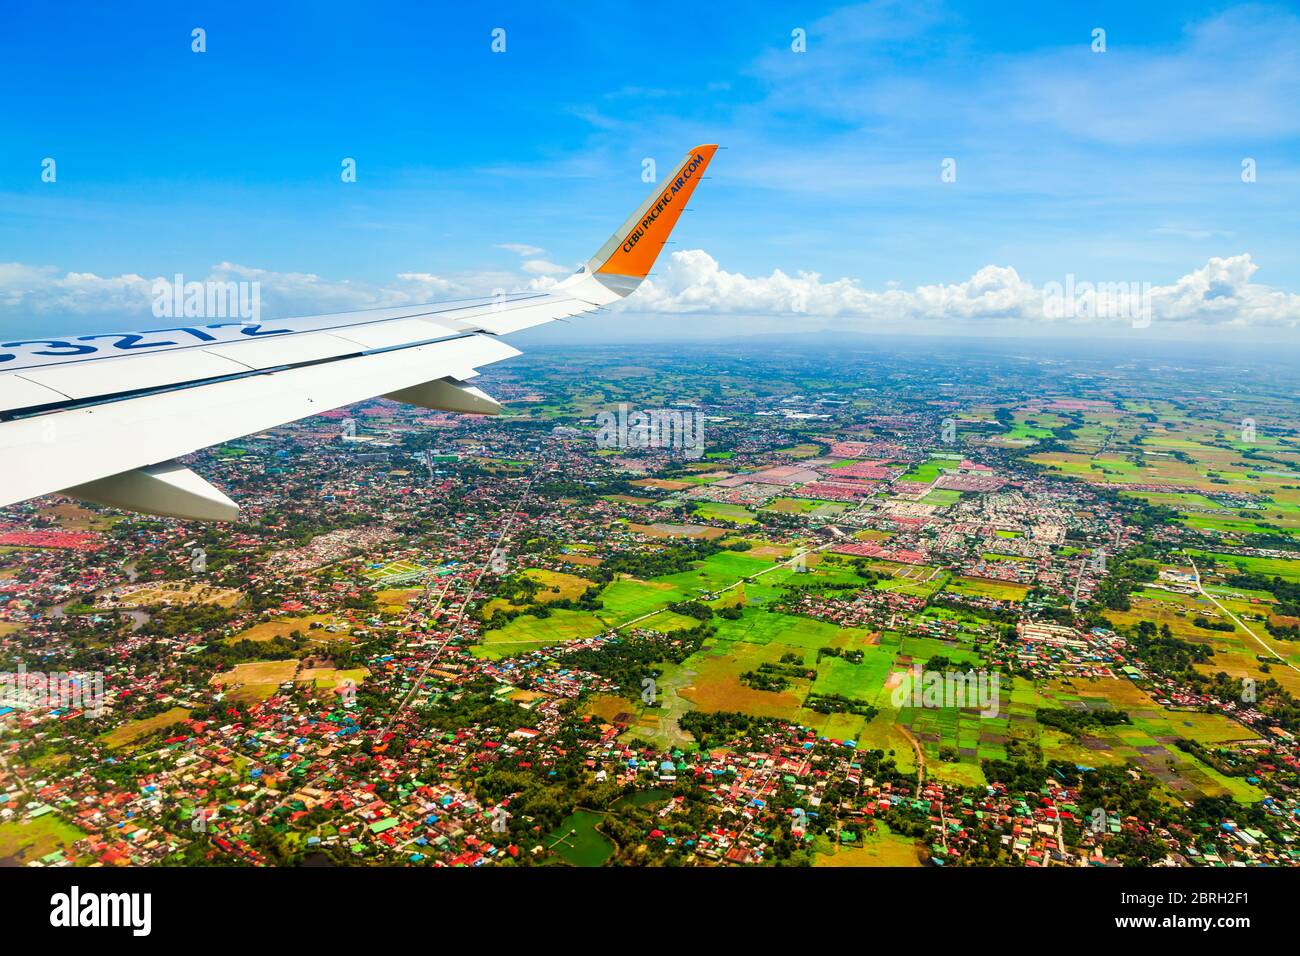 MANILA, PHILIPPINES - FEBRUARY 23, 2013: Cebu Pacific airplane wing above the Manila city suburbs in Philippines Stock Photo